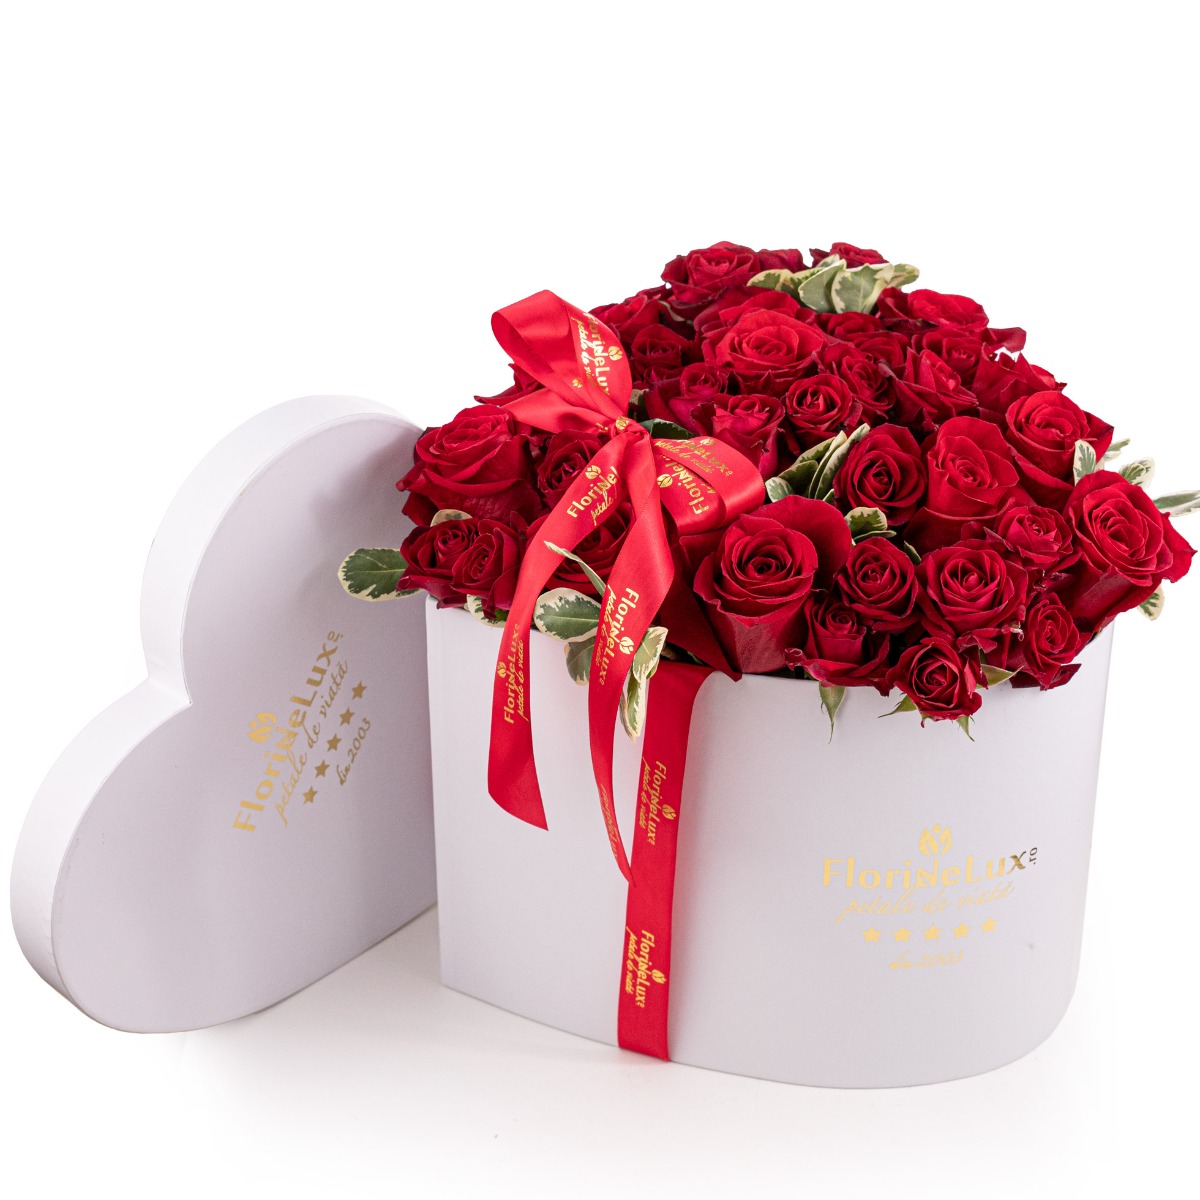 Cutie inima alba cu trandafiri rosii-Premium